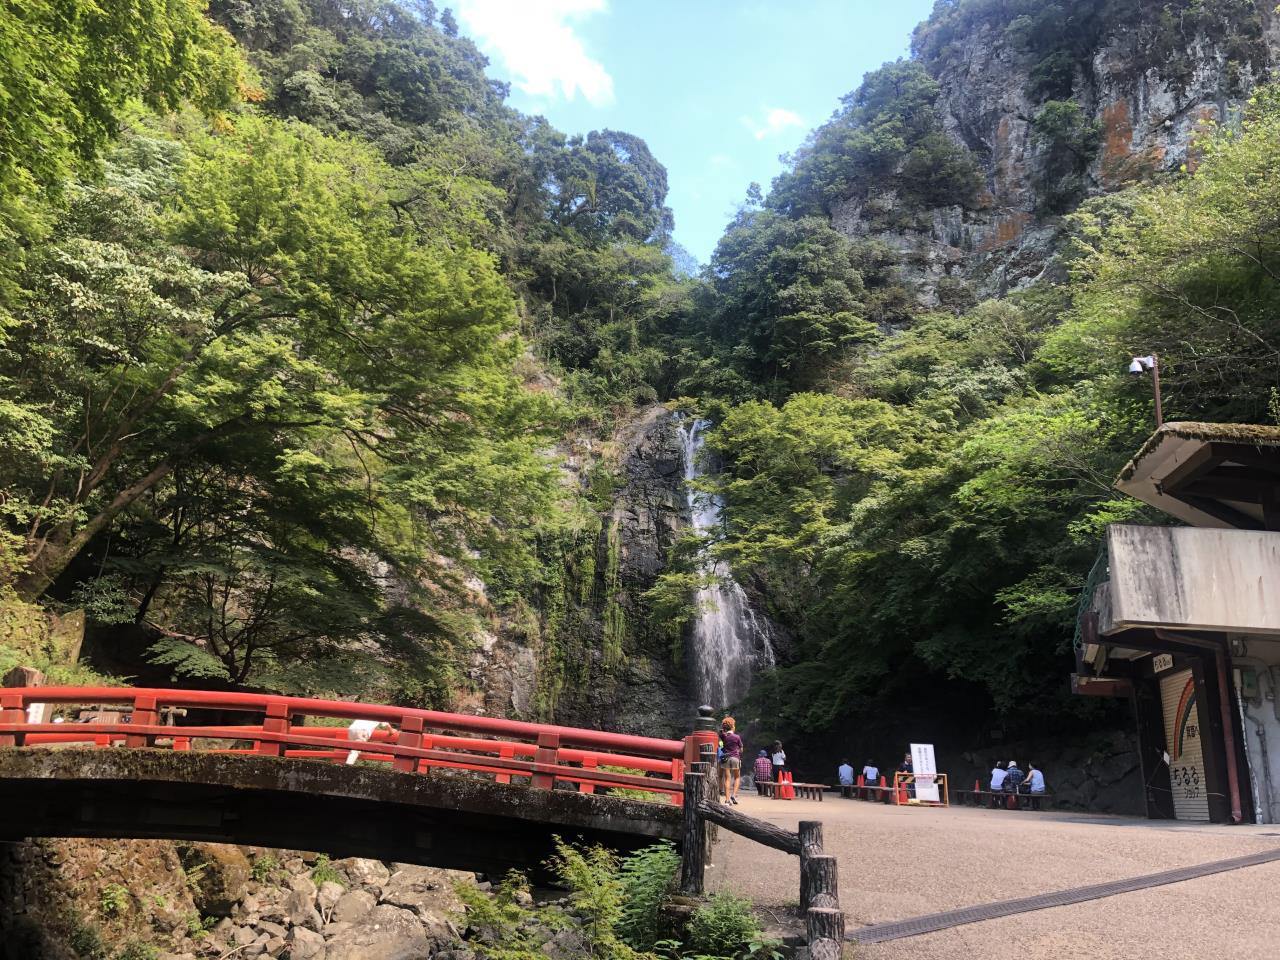 Hiking to the Minoh Waterfall and Discovering the “Winning Daruma”